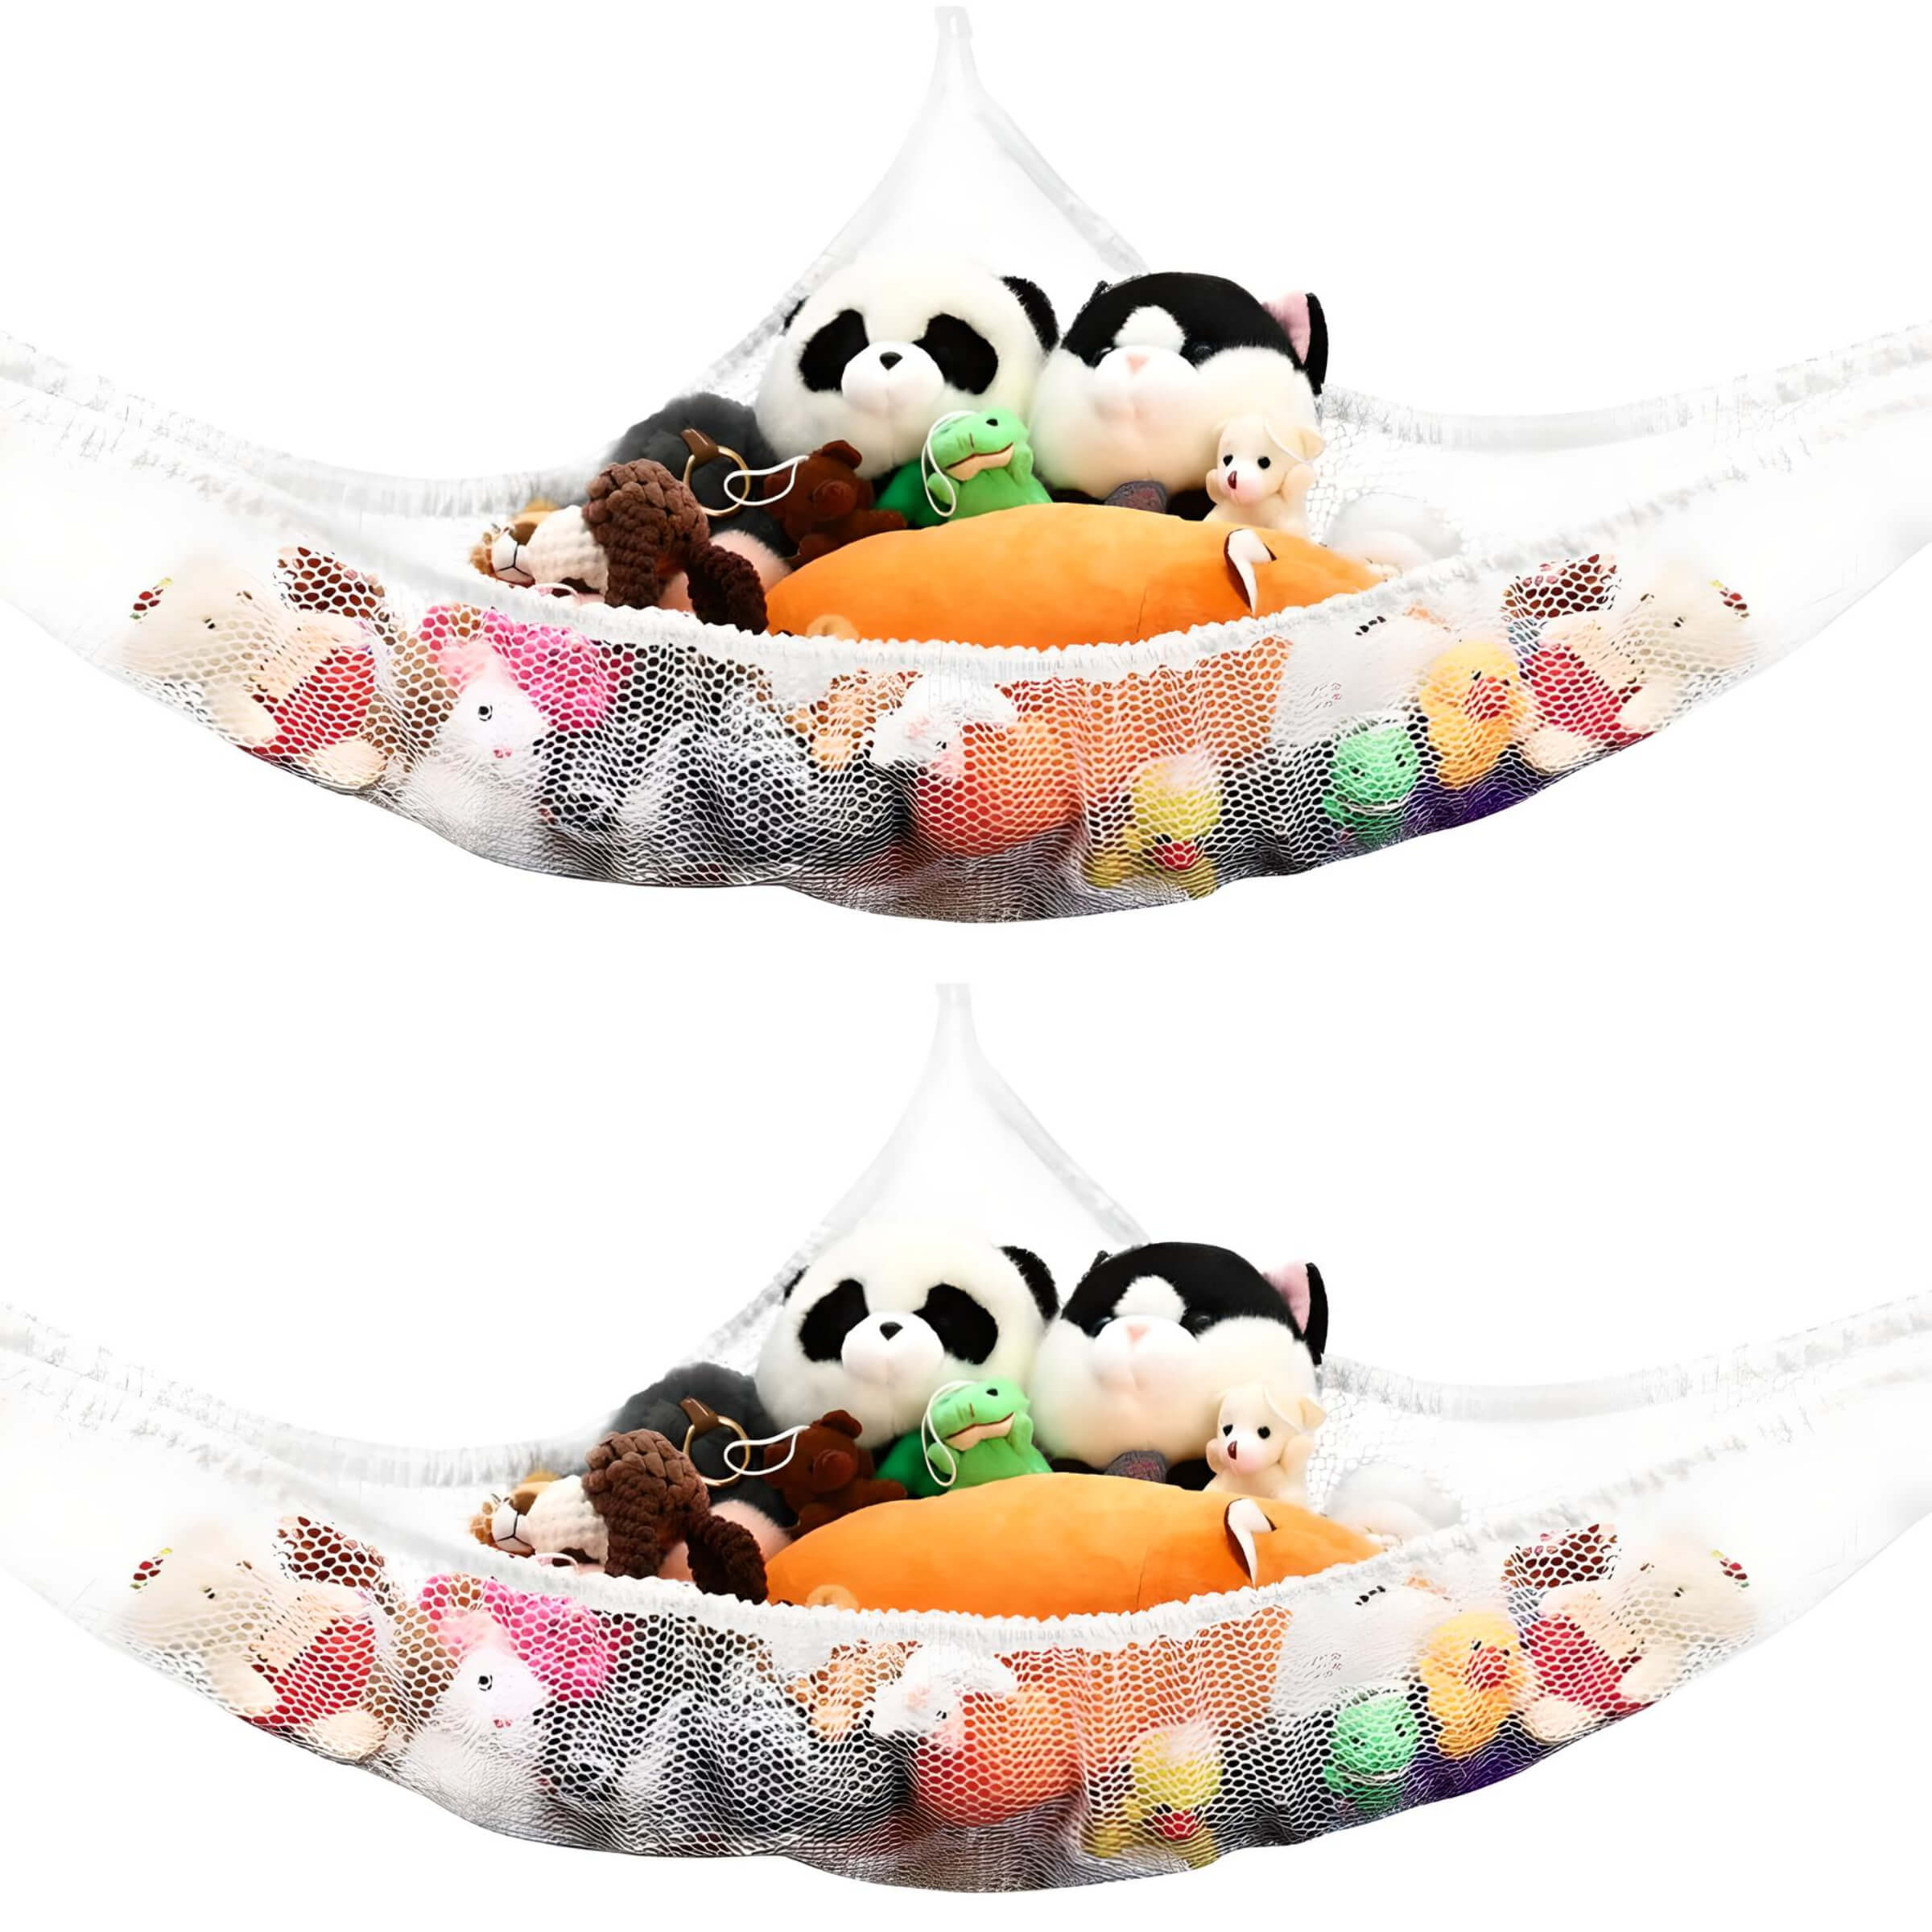 hanging-net-for-stuffed-animals-teddy-sitting